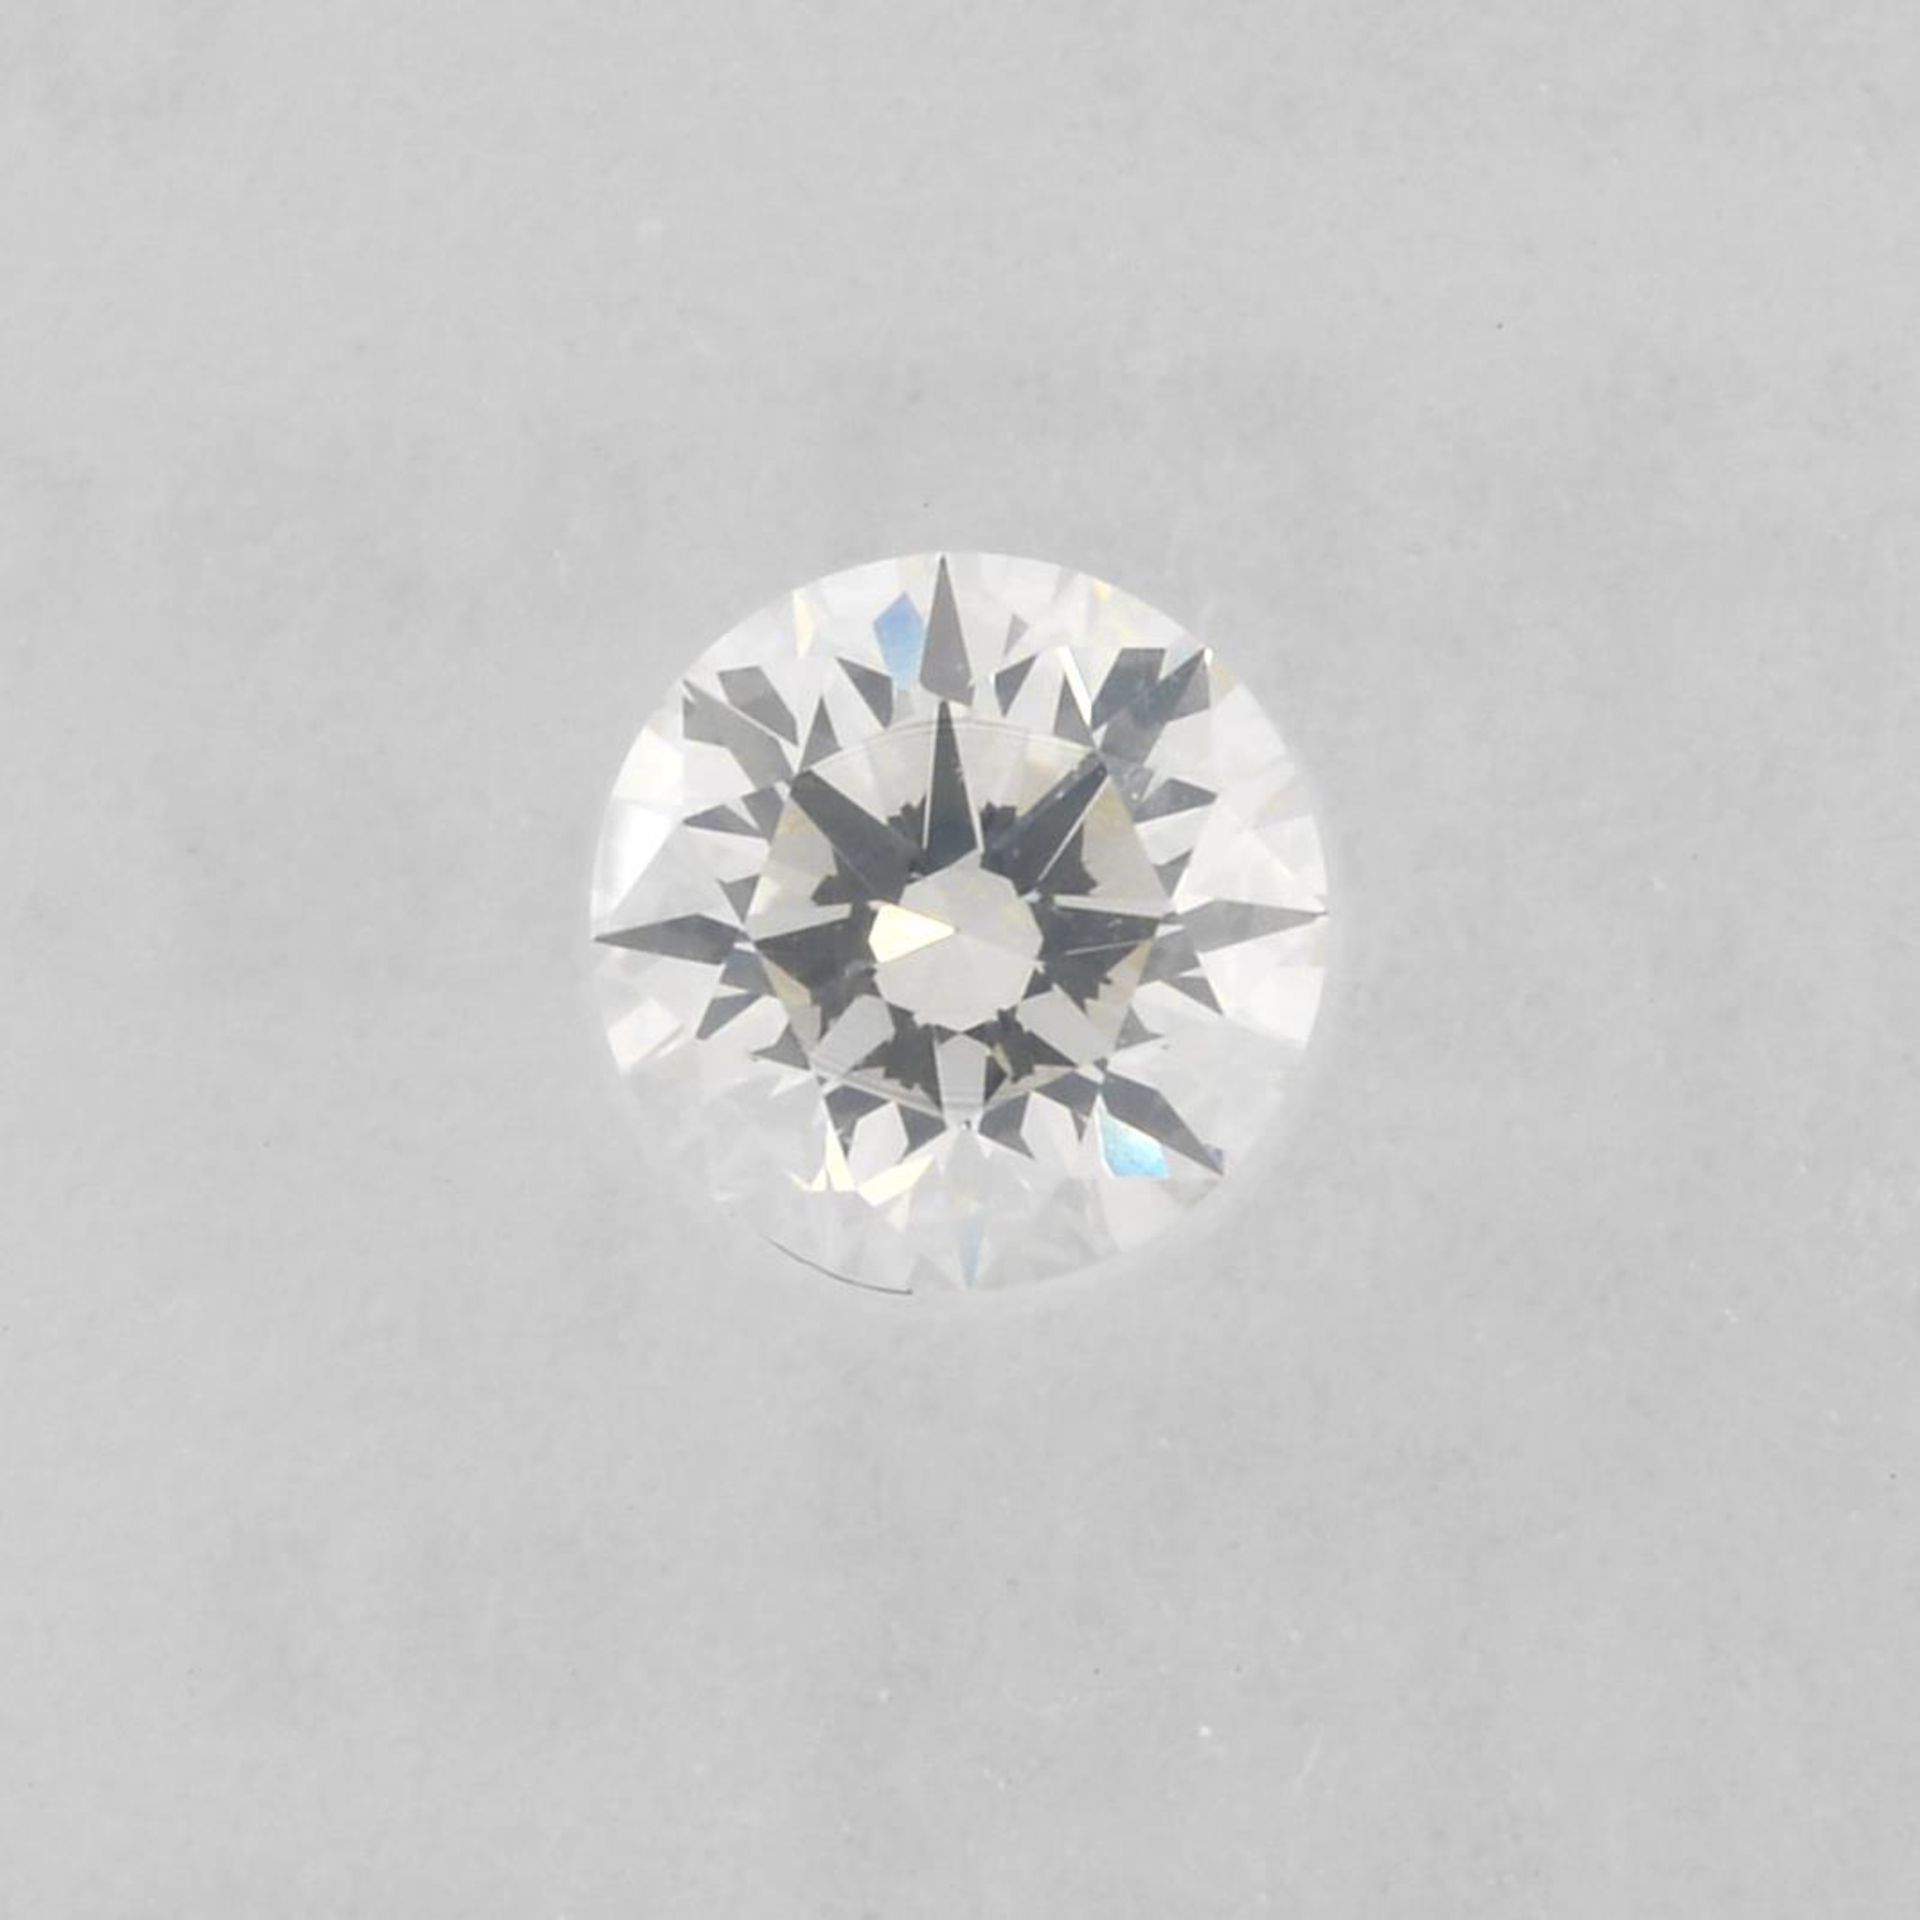 A brilliant-cut diamond, weighing 0.25ct.